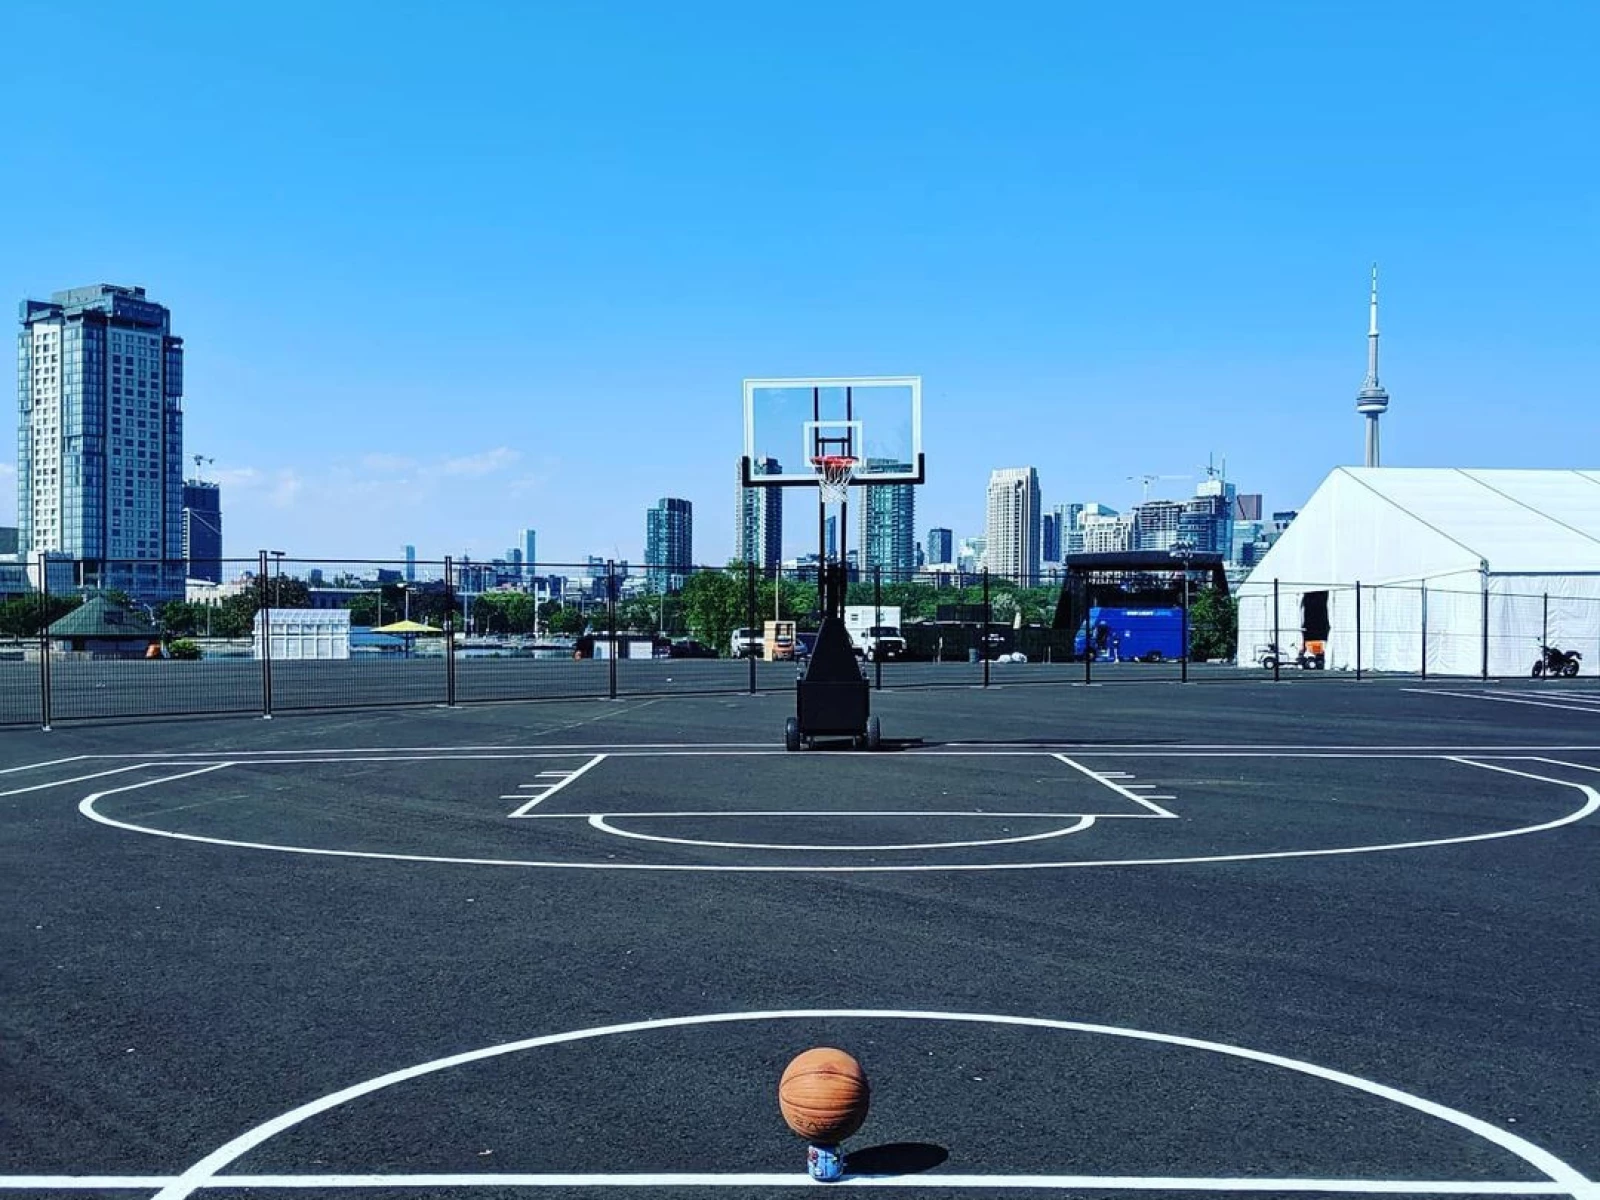 Toronto Basketball Court: Trillium Park – Courts of the World